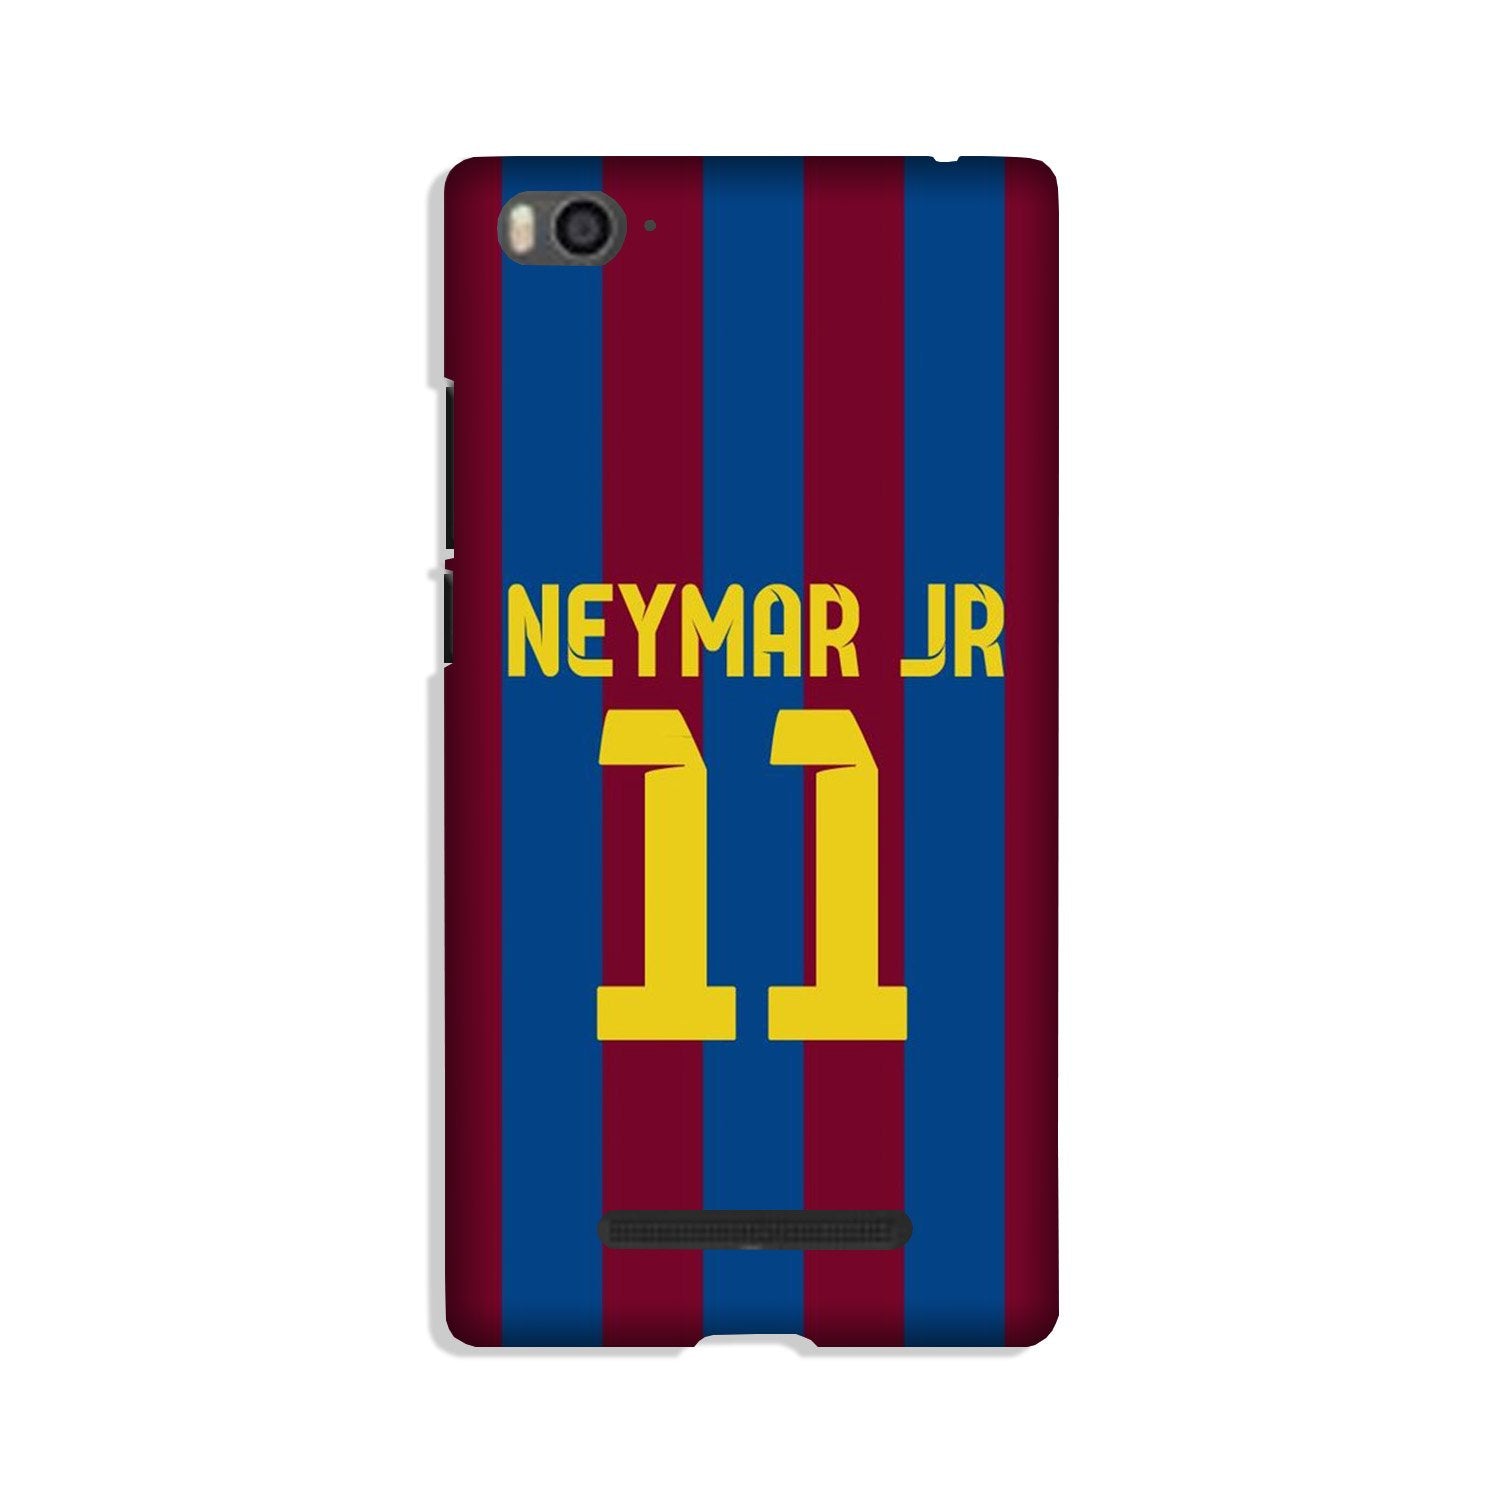 Neymar Jr Case for Xiaomi Mi 4i(Design - 162)